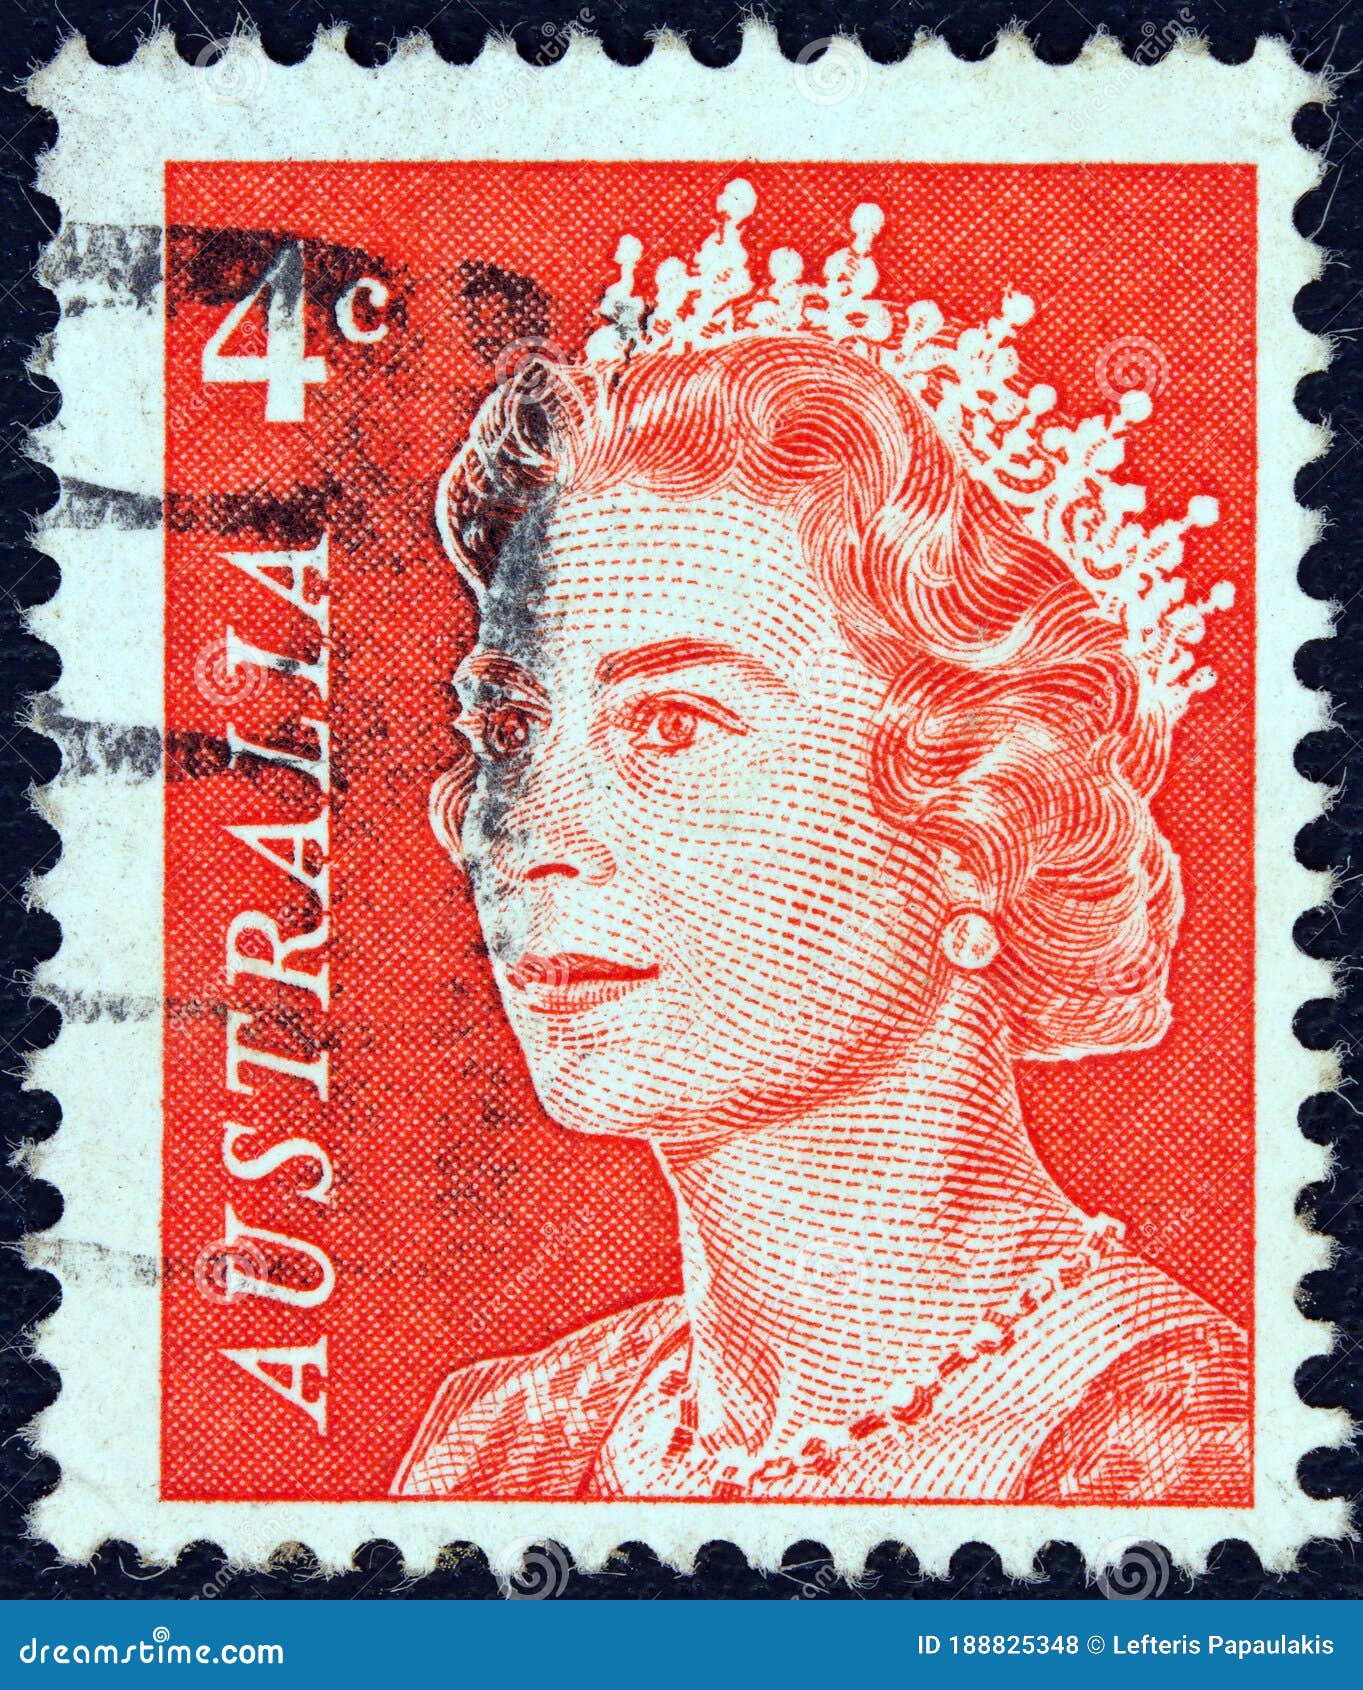 Australia Circa 1966 Un Sello Impreso En Australia Muestra Un Retrato De La Reina Elizabeth Ii